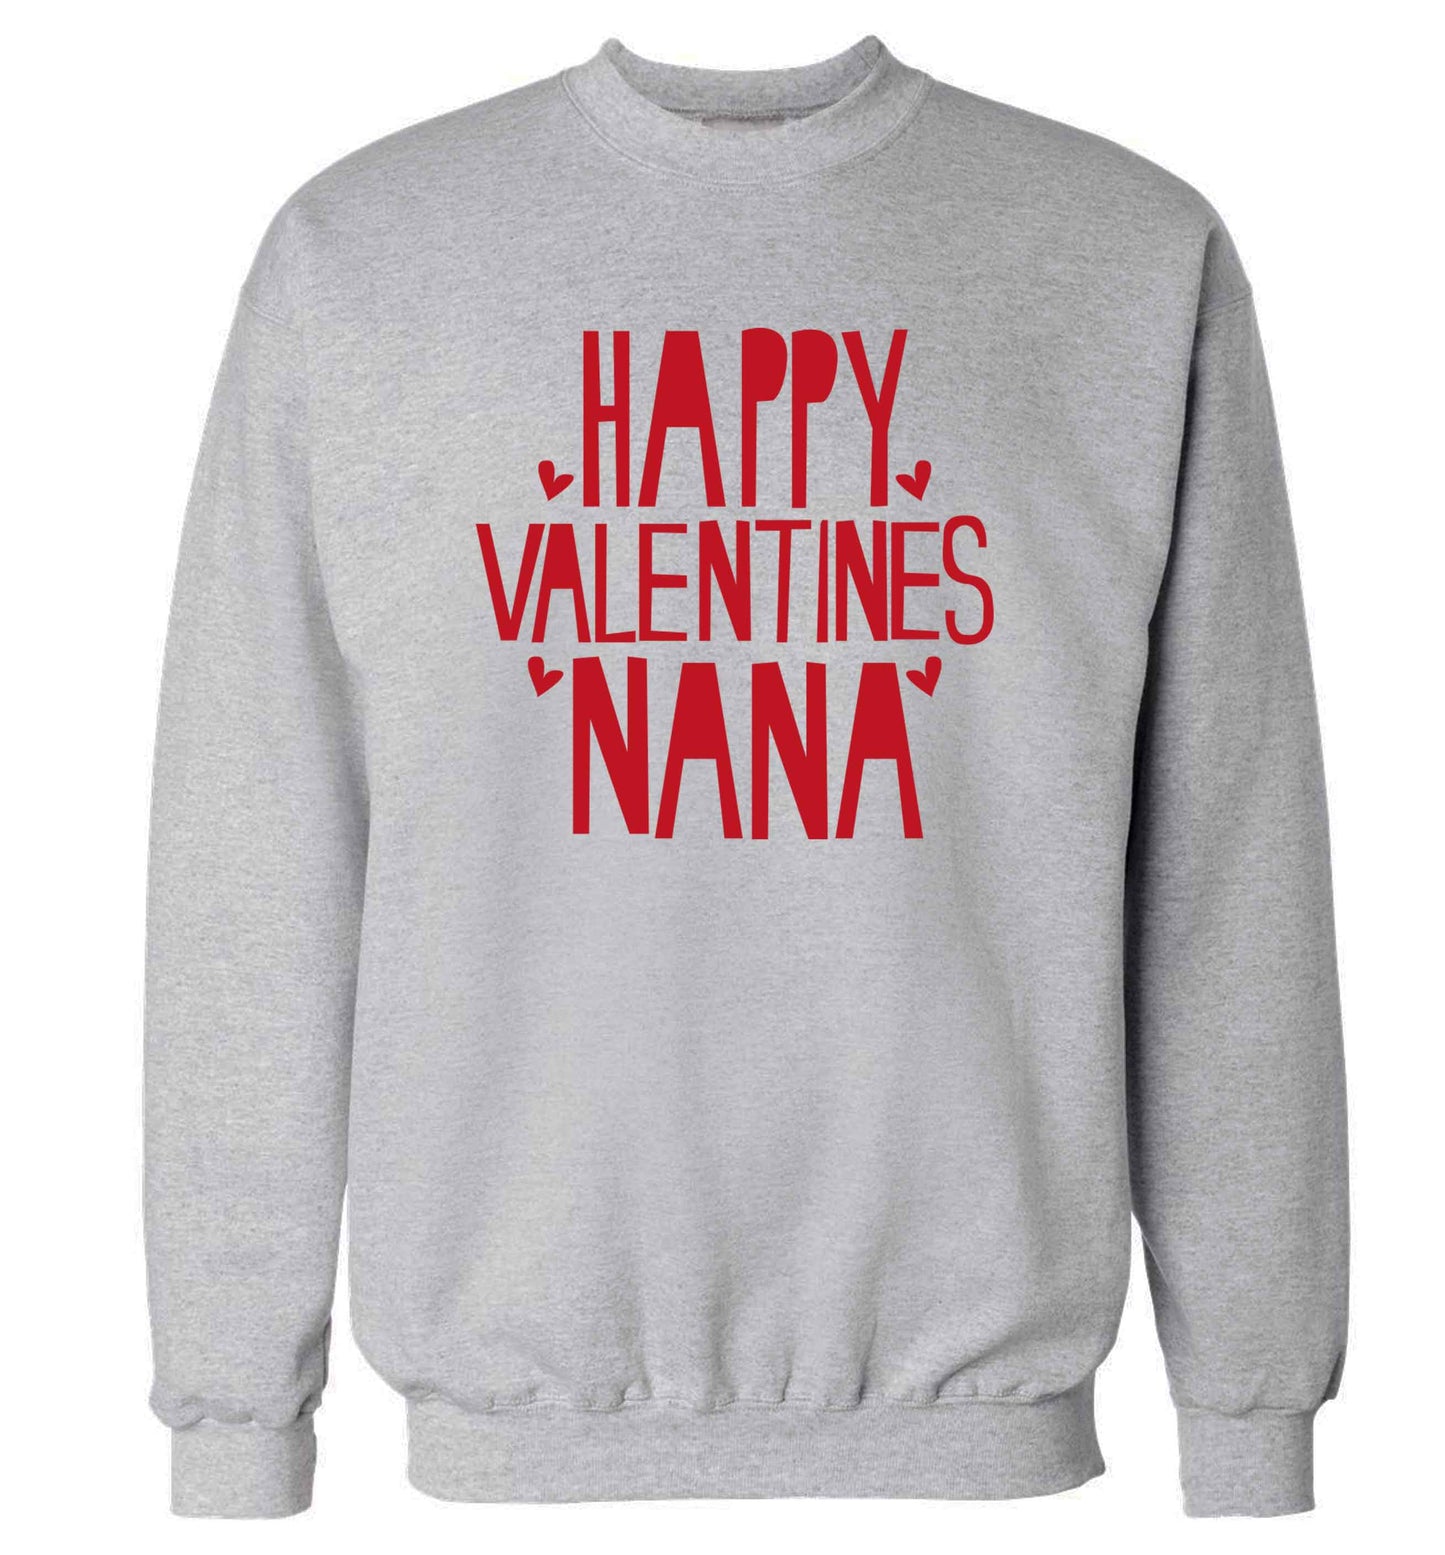 Happy valentines nana adult's unisex grey sweater 2XL